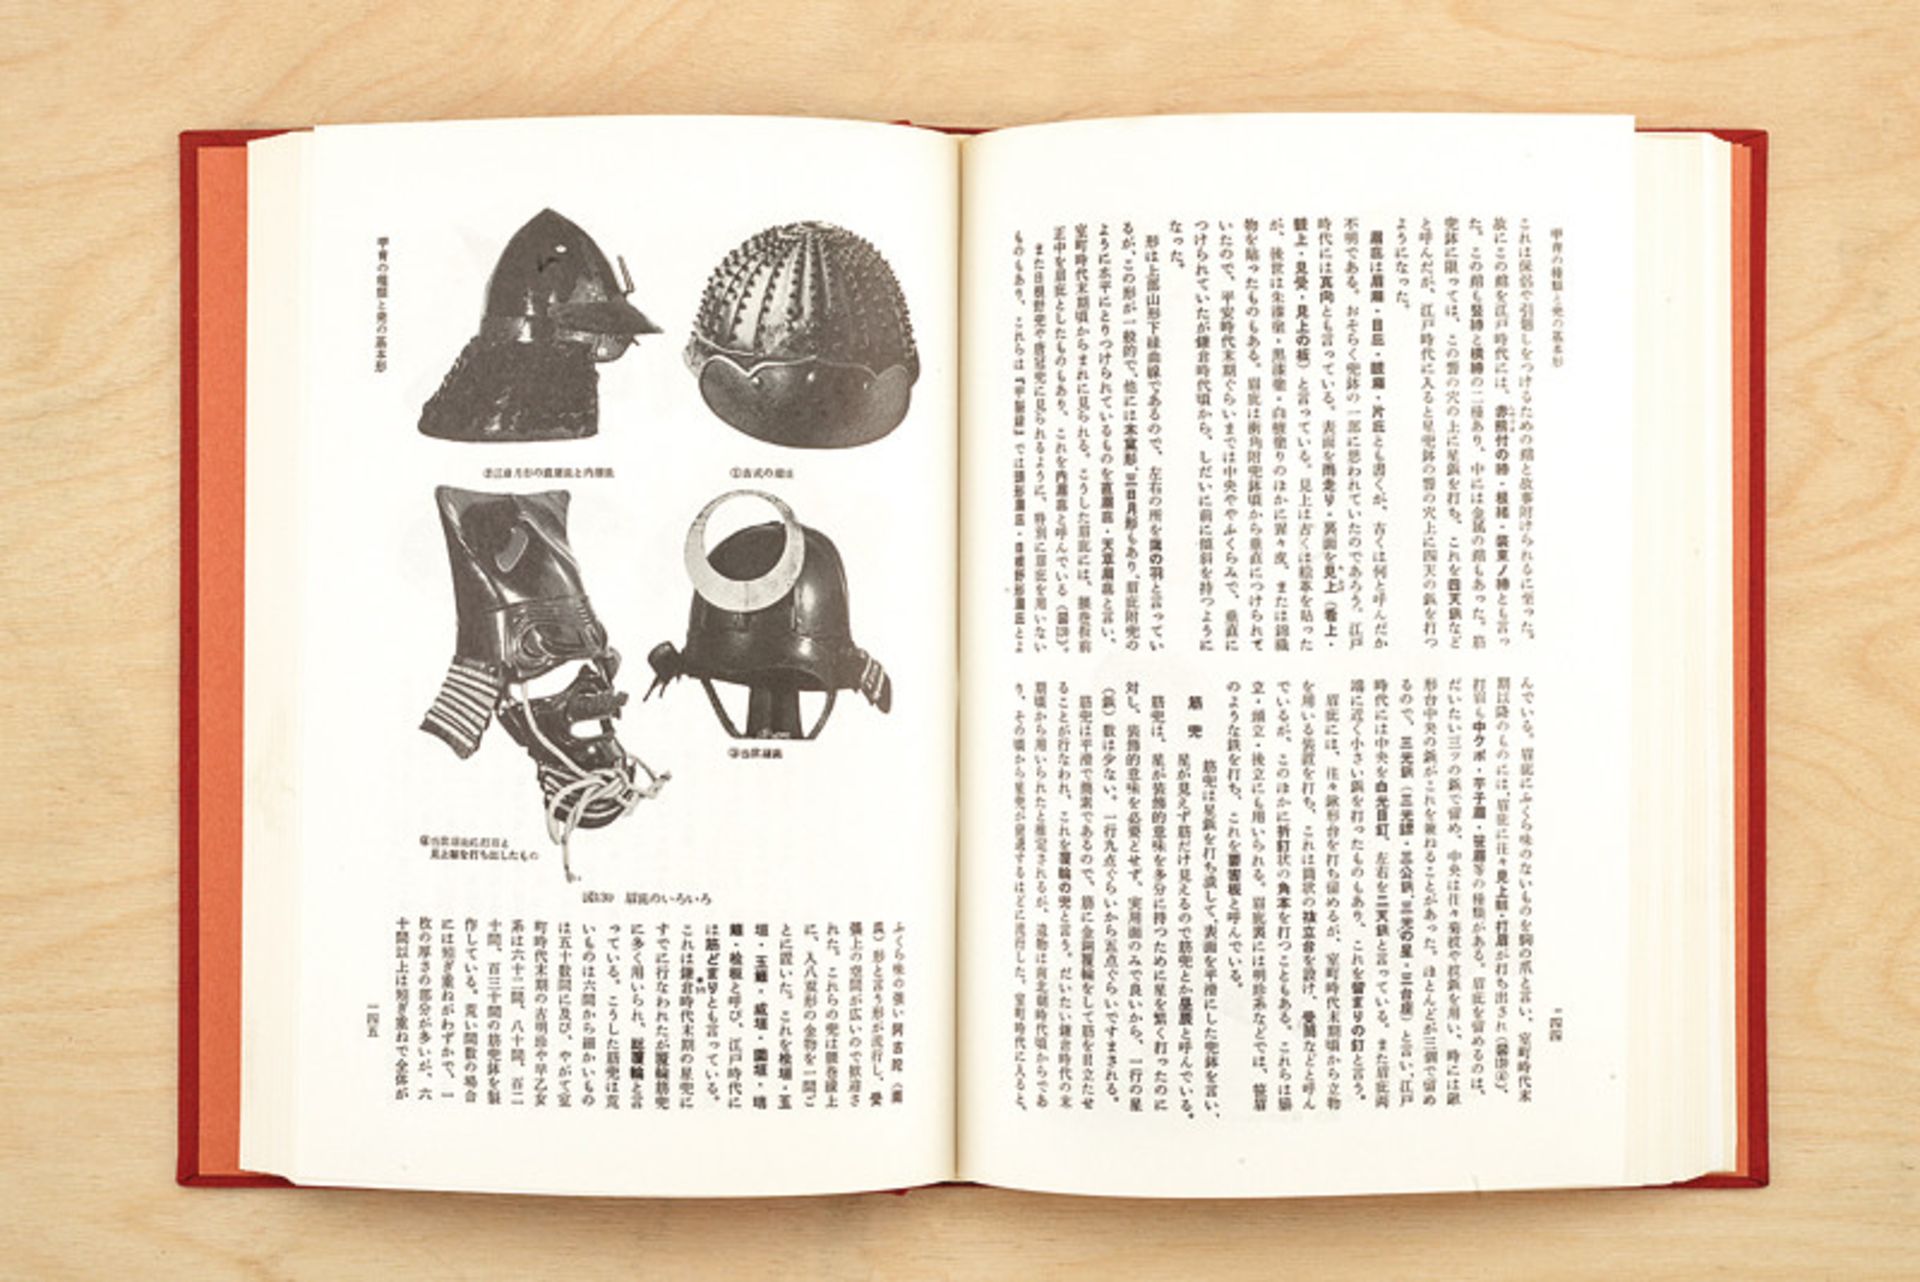 Sasama, Yoshihiko dating: 20th Century provenance: Japan "Zukai Nihon katchu jiten"; 299 pages, text - Image 3 of 4